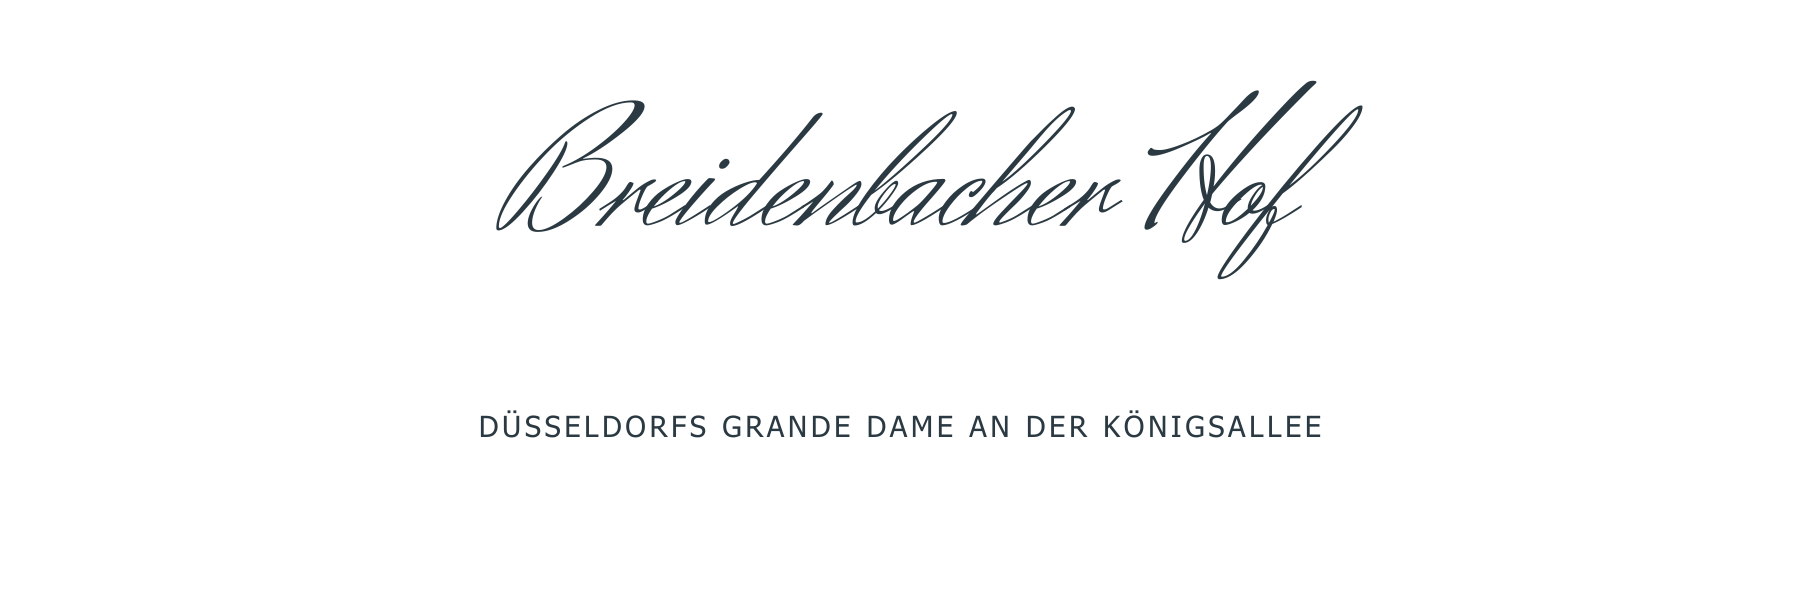 Breidenbacher Hof Düsseldorf